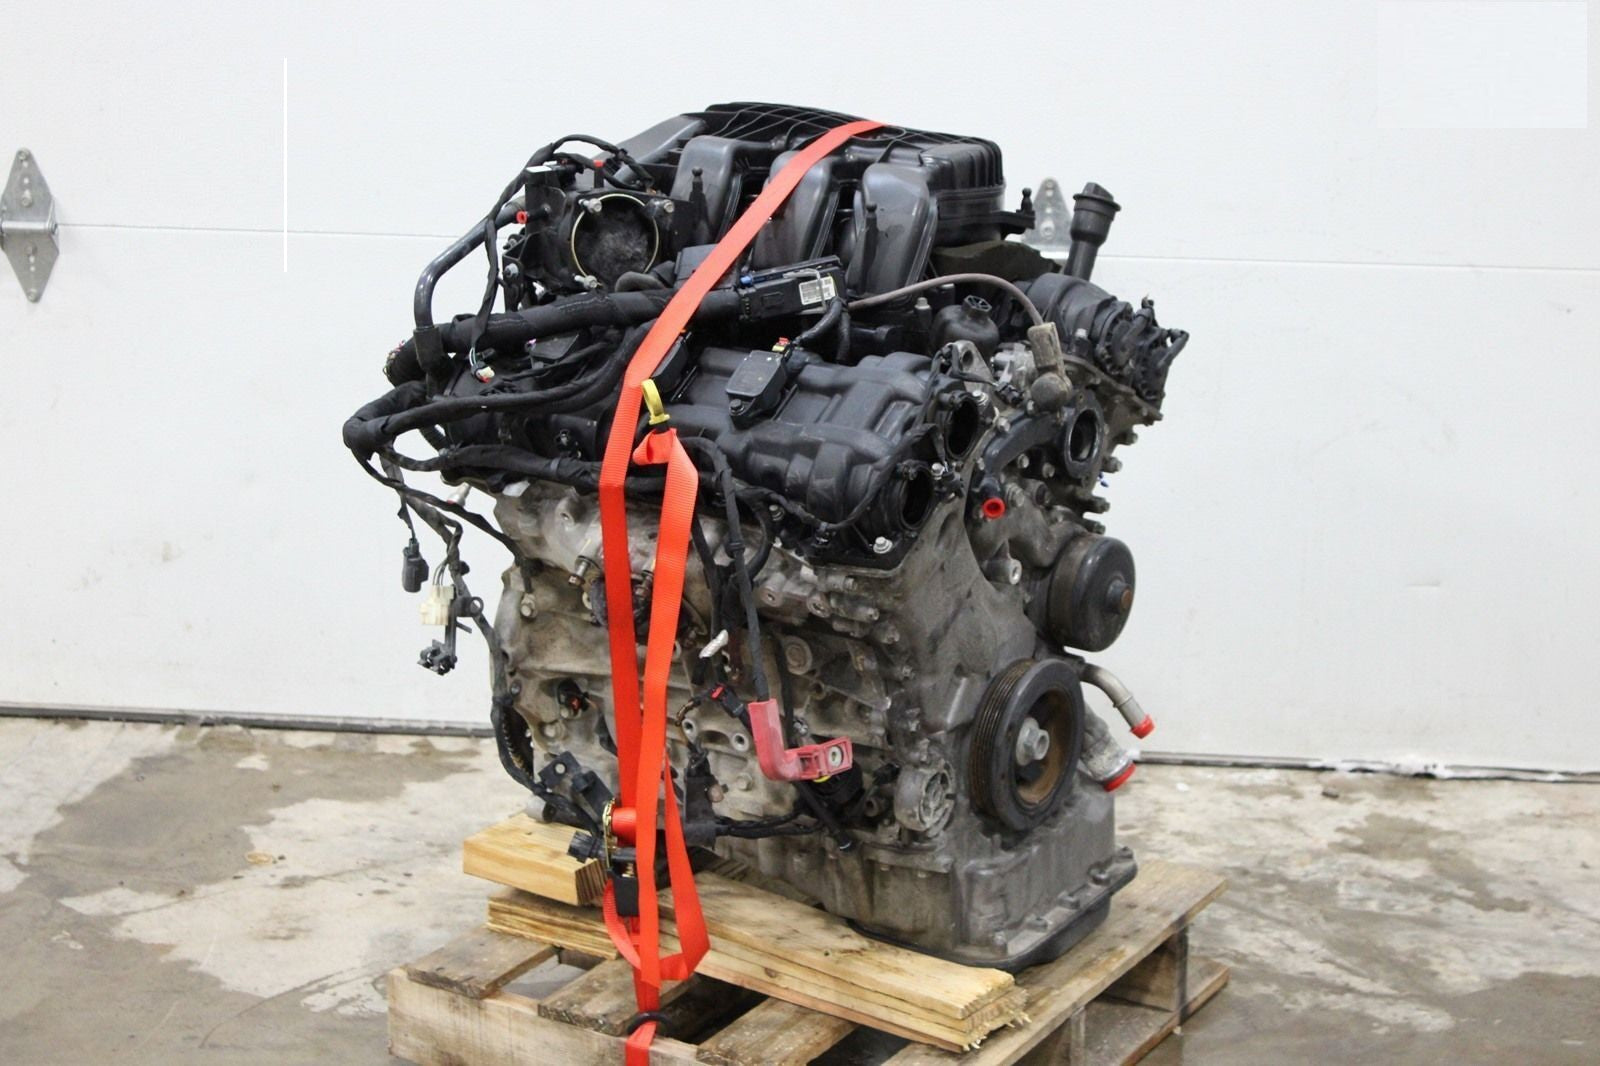 Chrysler 200s Pentastar 3.6L Engines 2011-2015